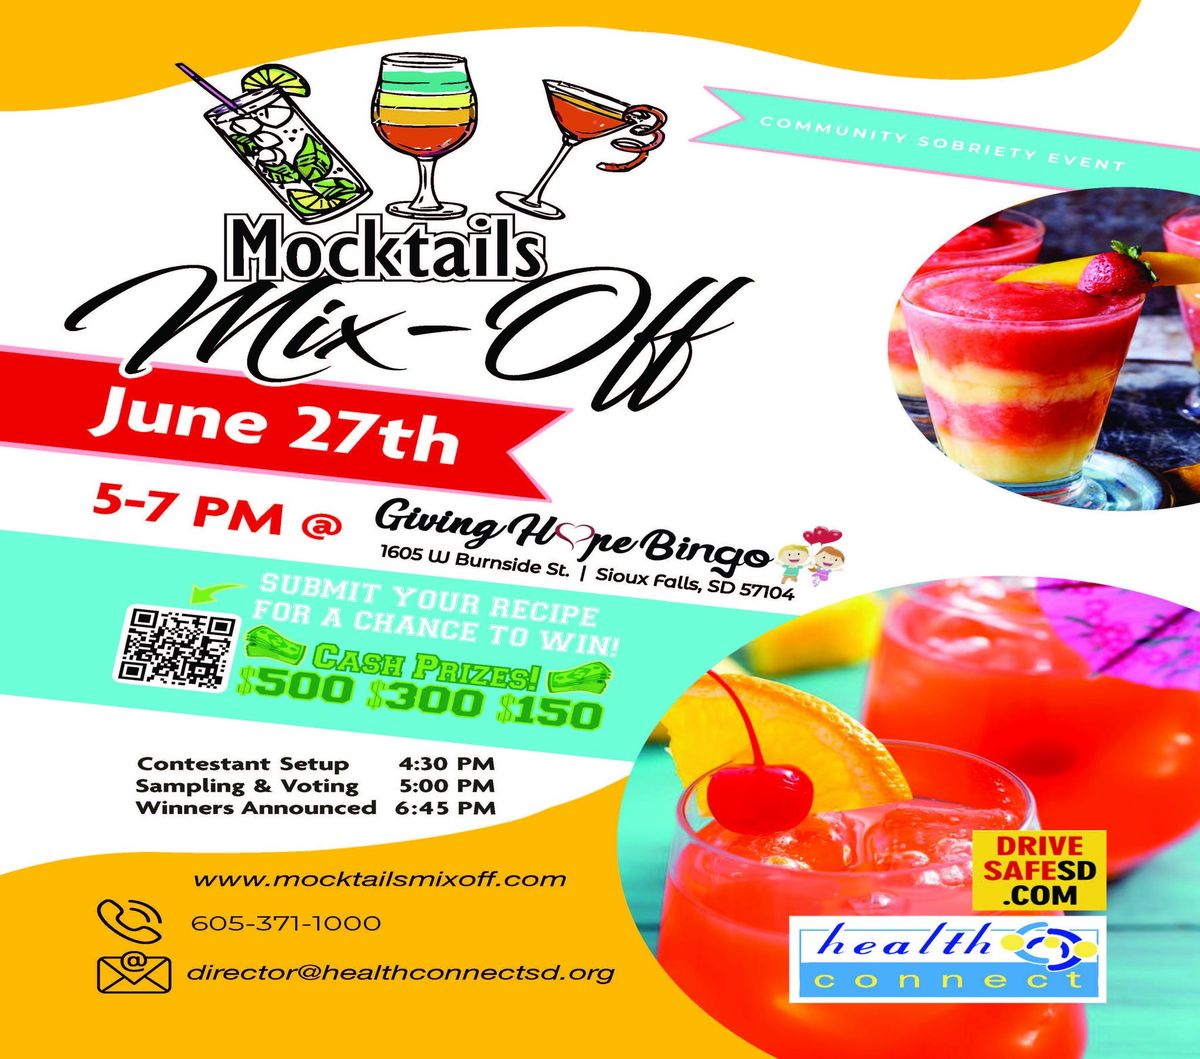 Summer Mocktails Mixoff - Community Sobriety Event